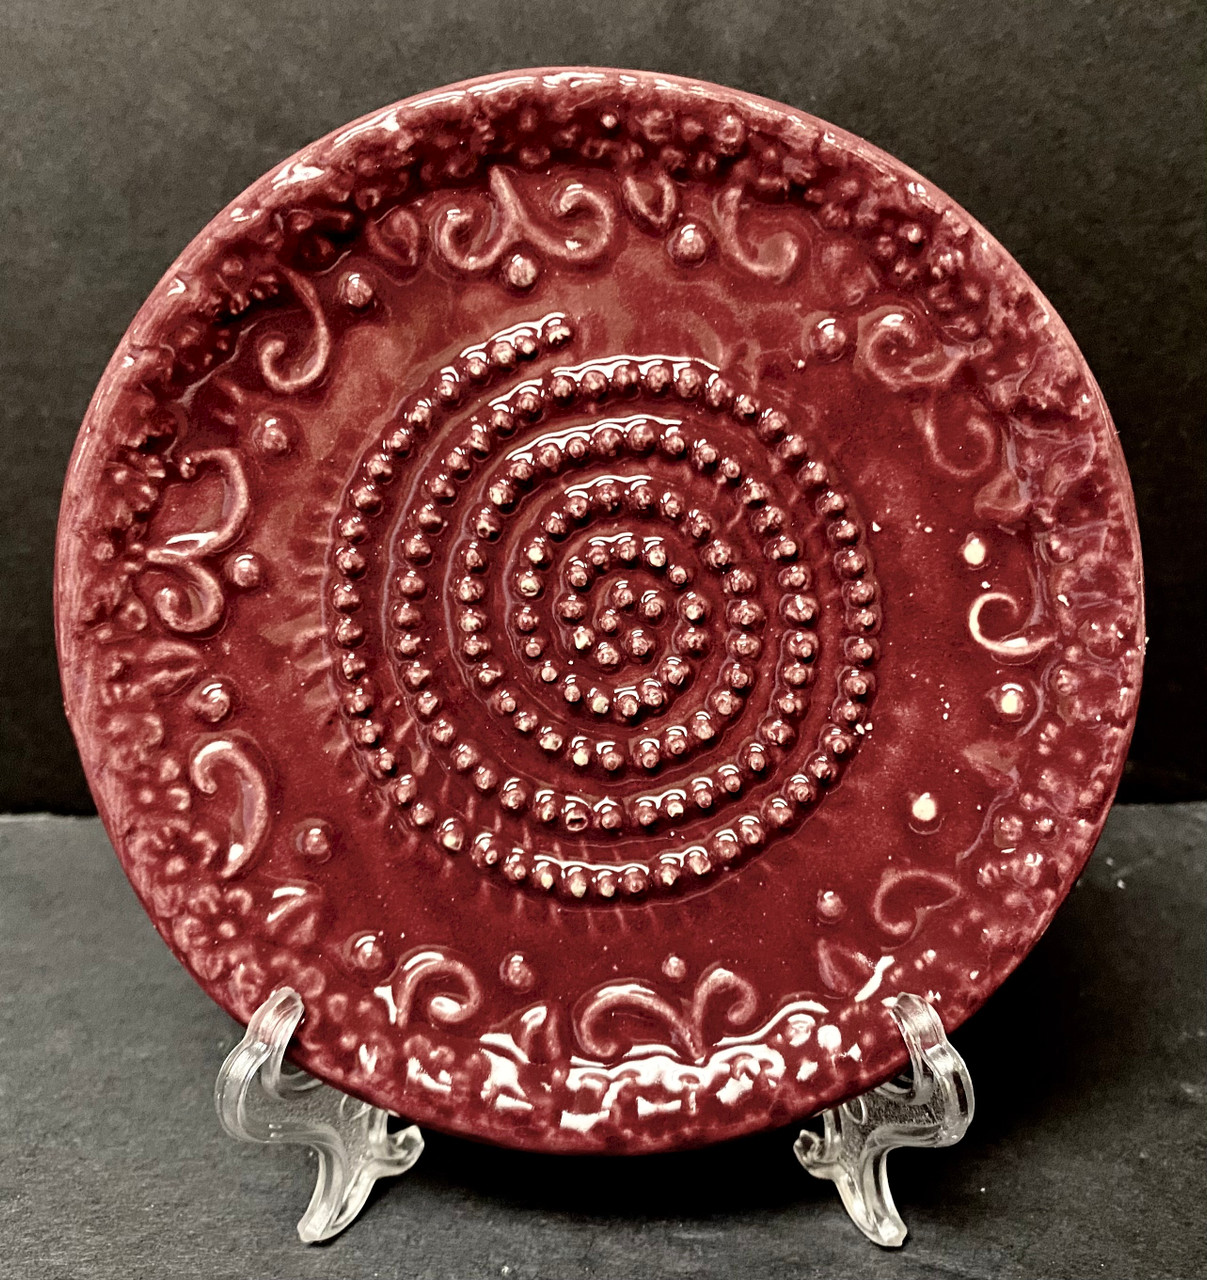 COOKS INNOVATIONS Ceramic Grater Plate 3 Piece Set - Grater, Peeler, &  Brush - Beautiful Garlic Design - Red & Yellow 